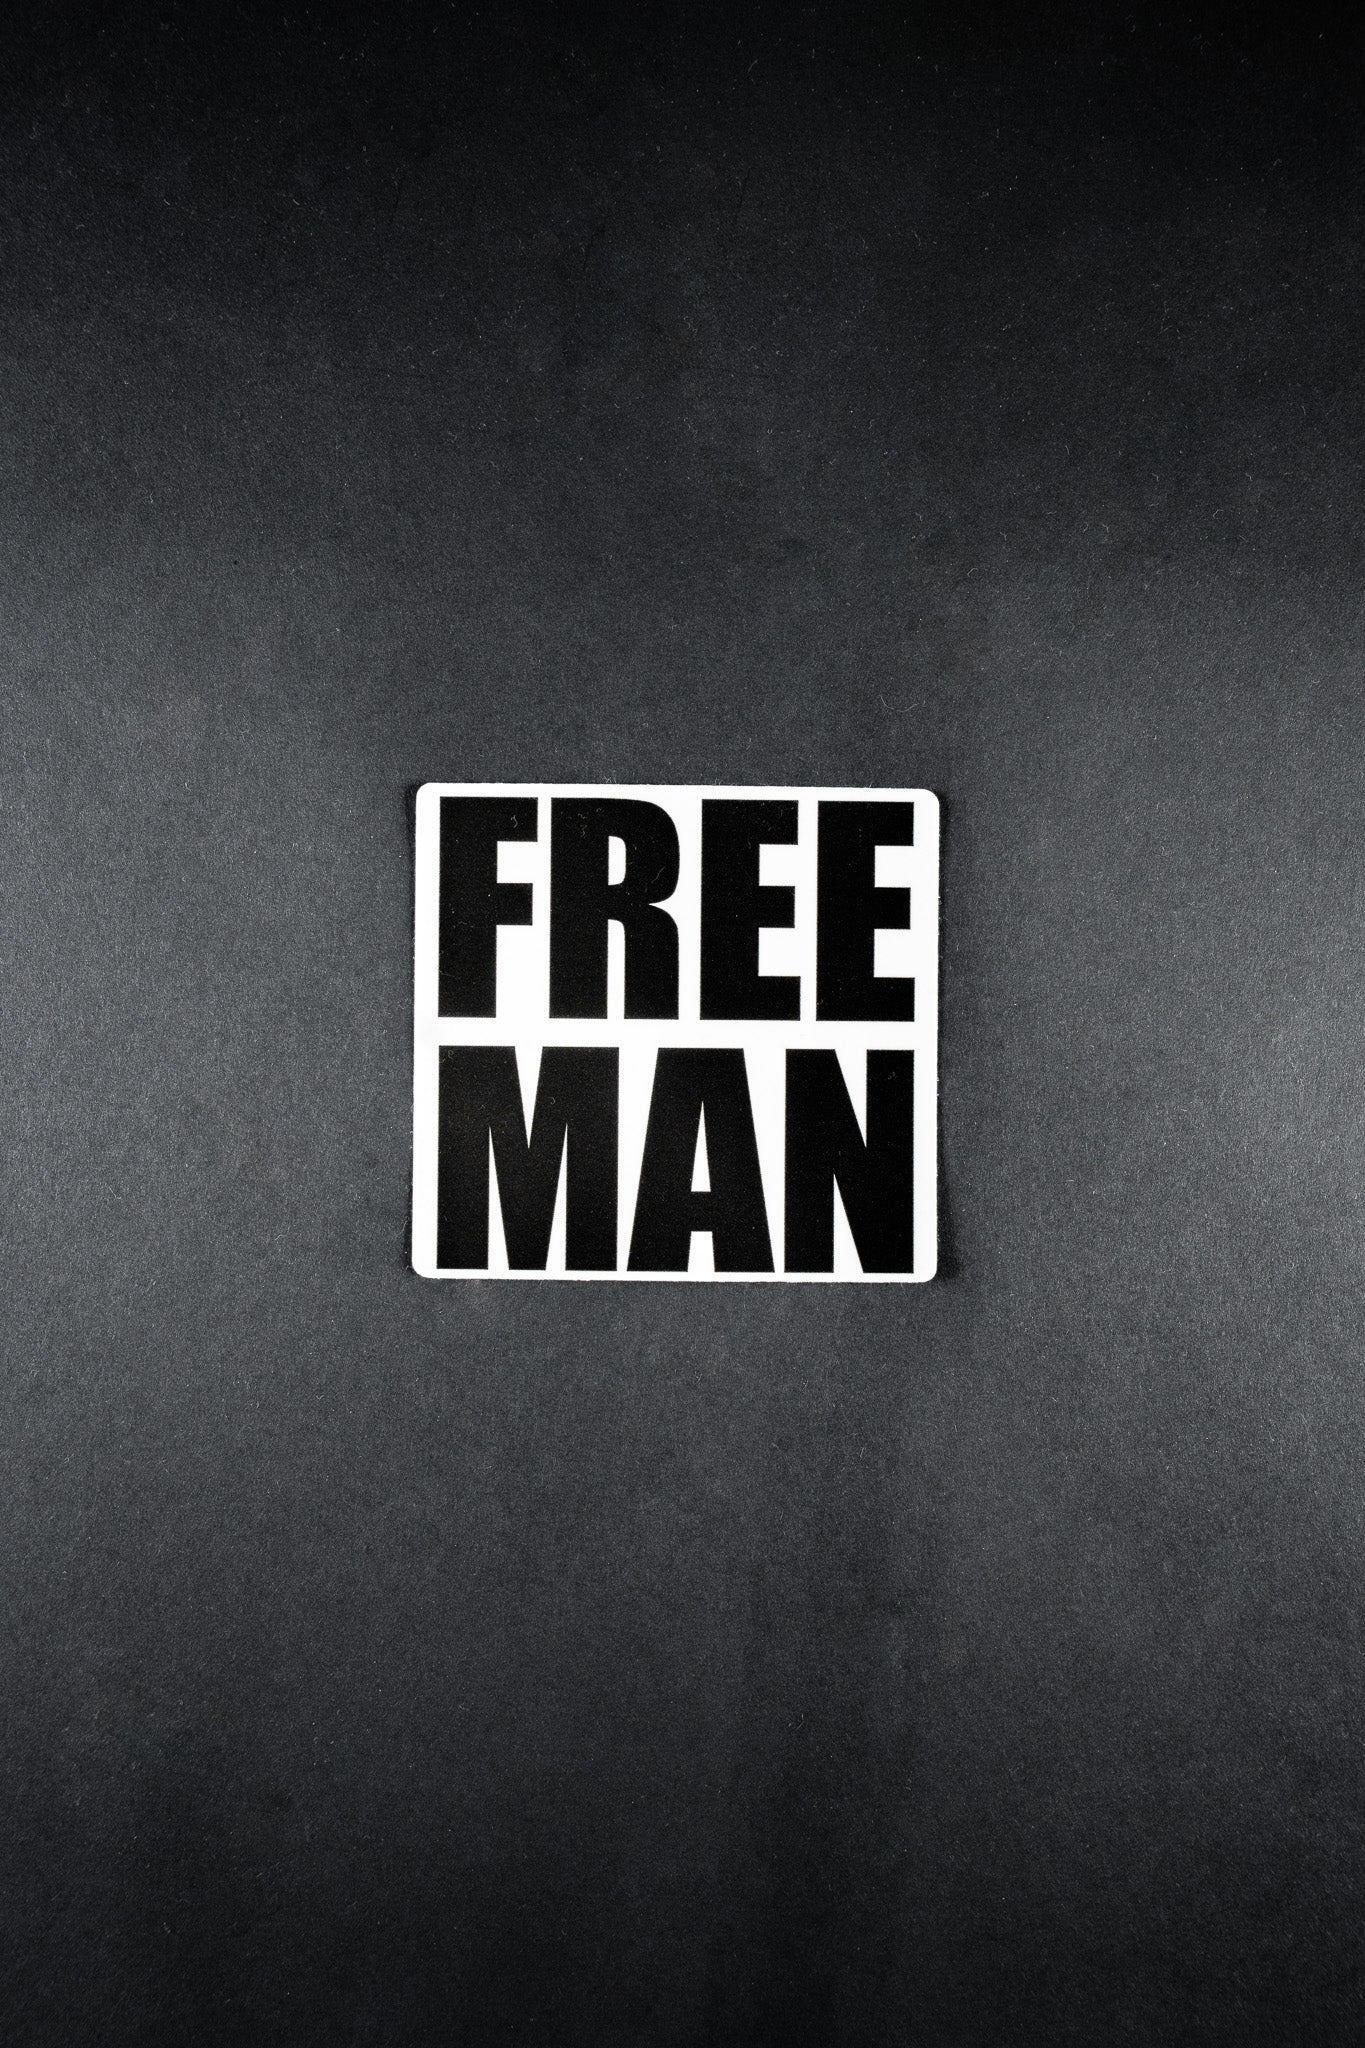 "FREE MAN" VINYL STICKER - Lions Not Sheep ®